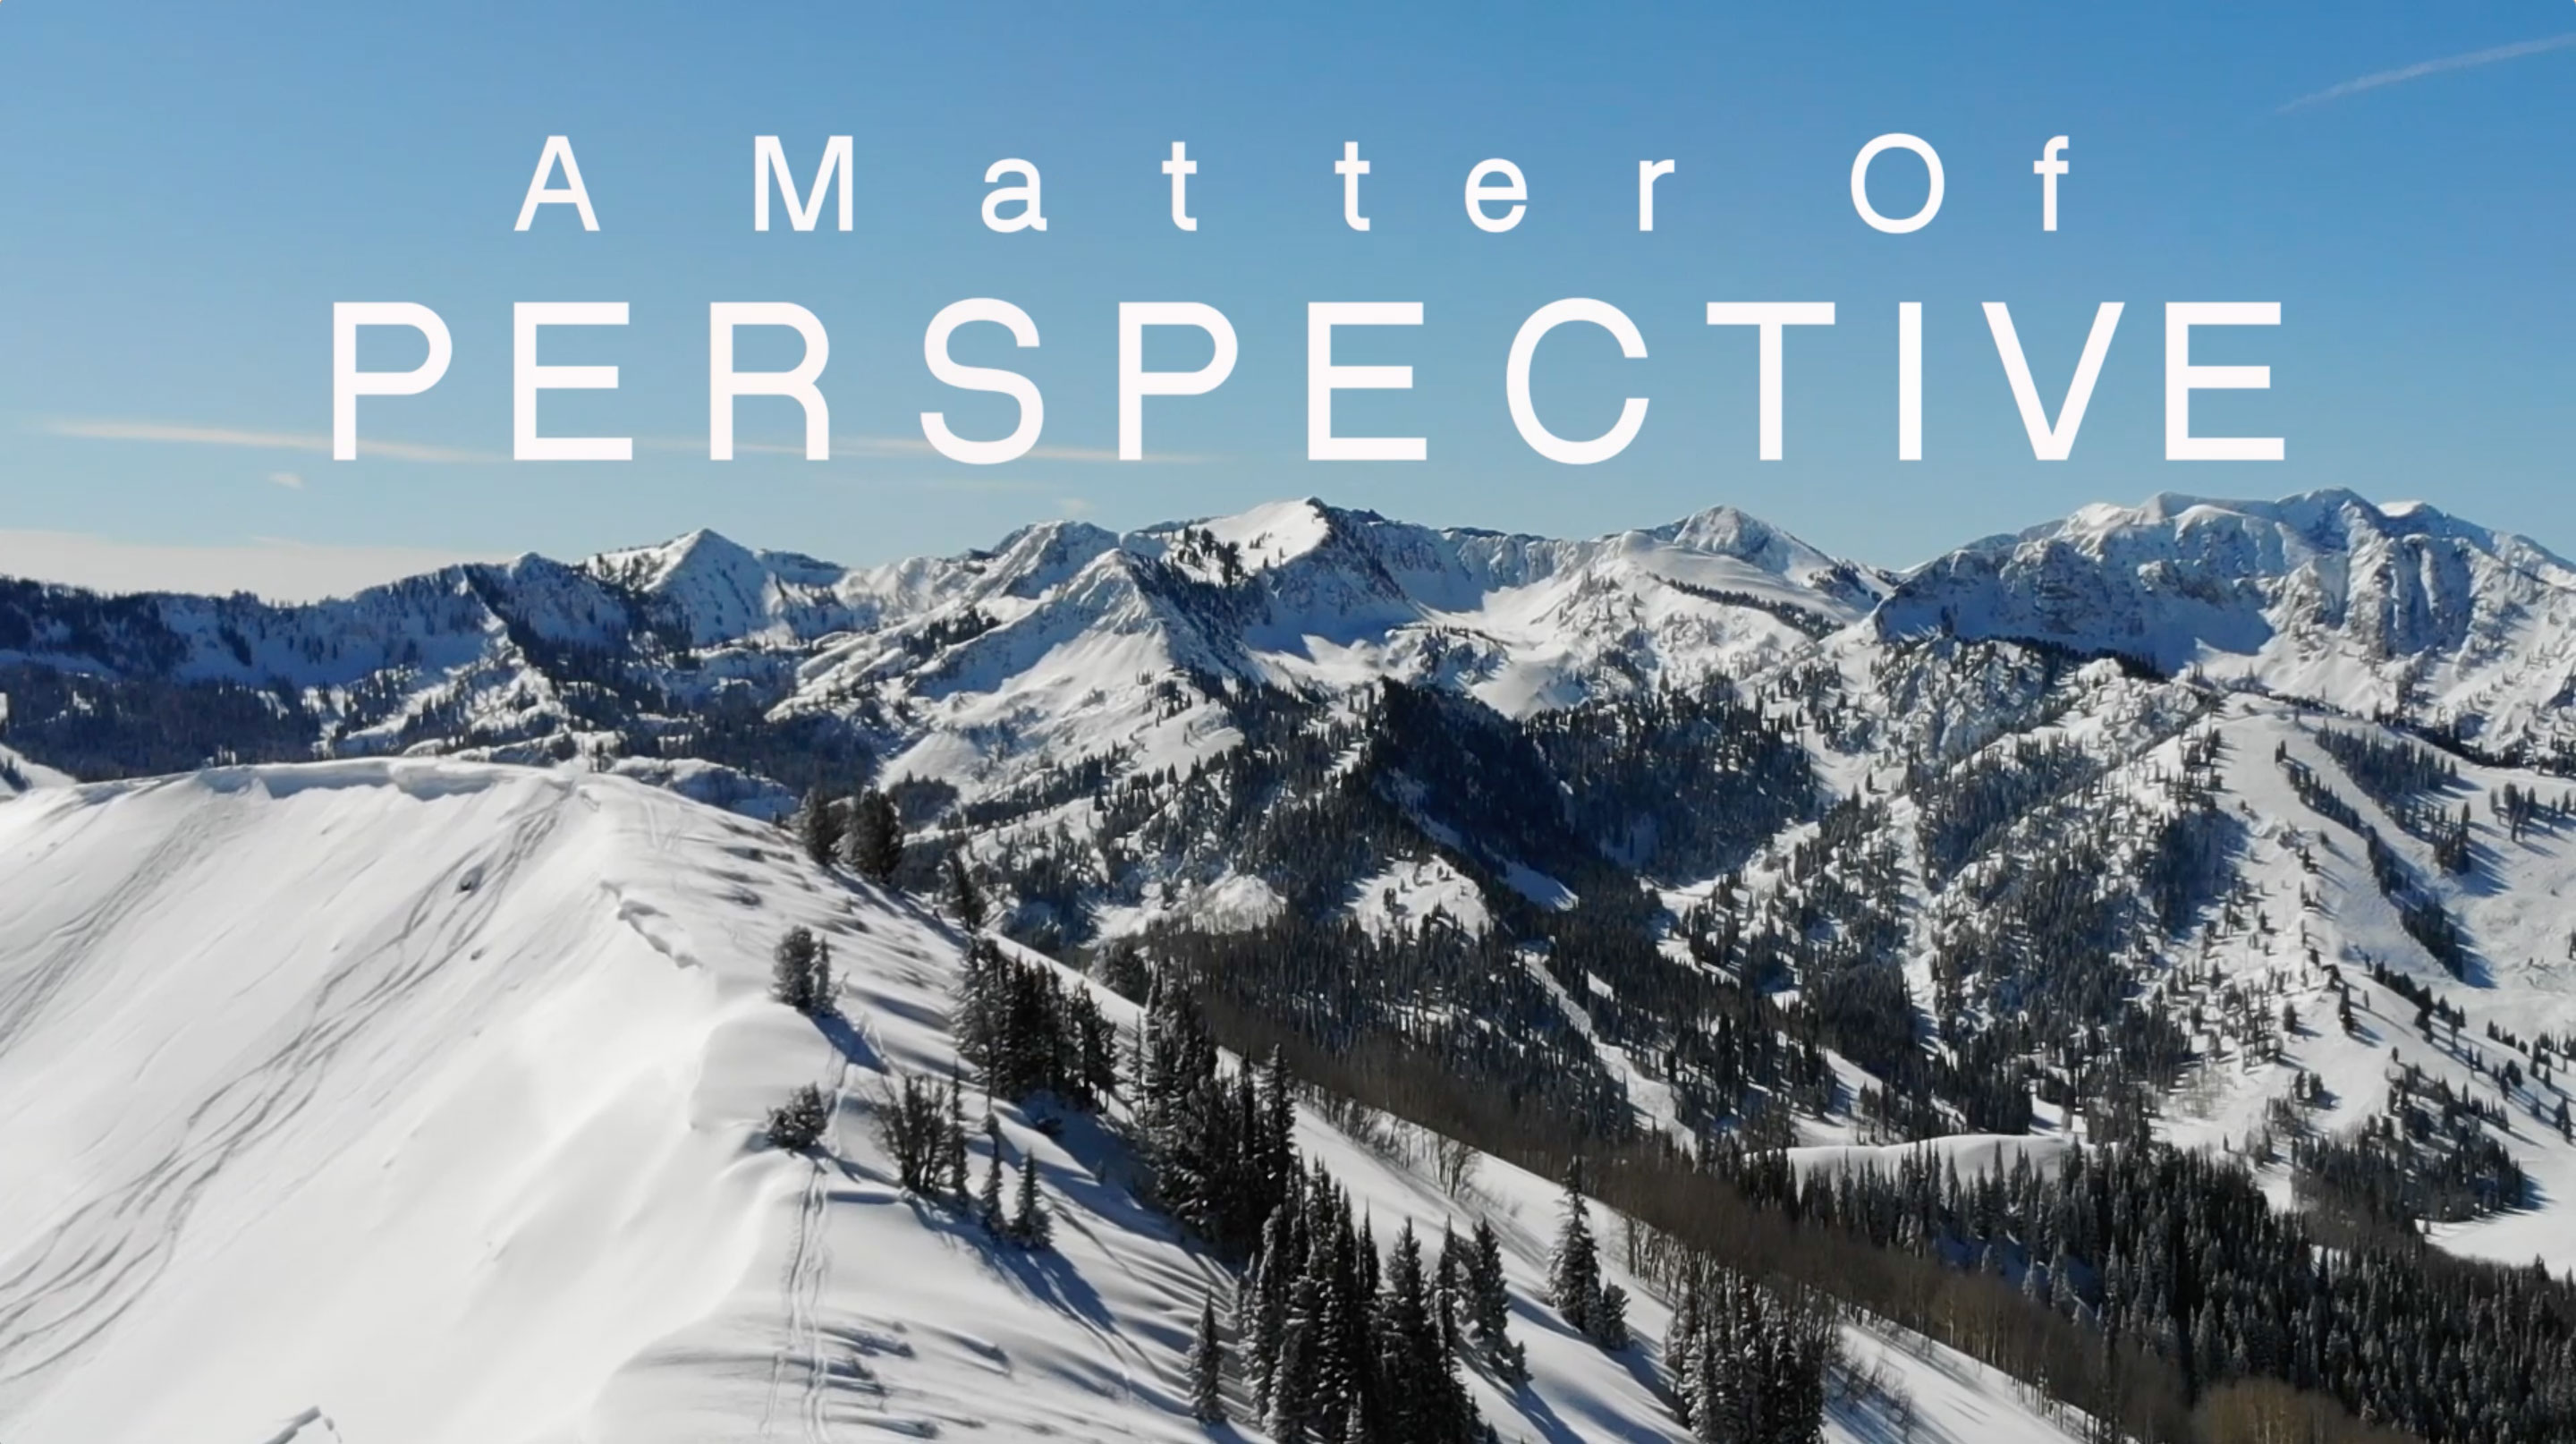 A matter of perspective2018 Ski Season Edit